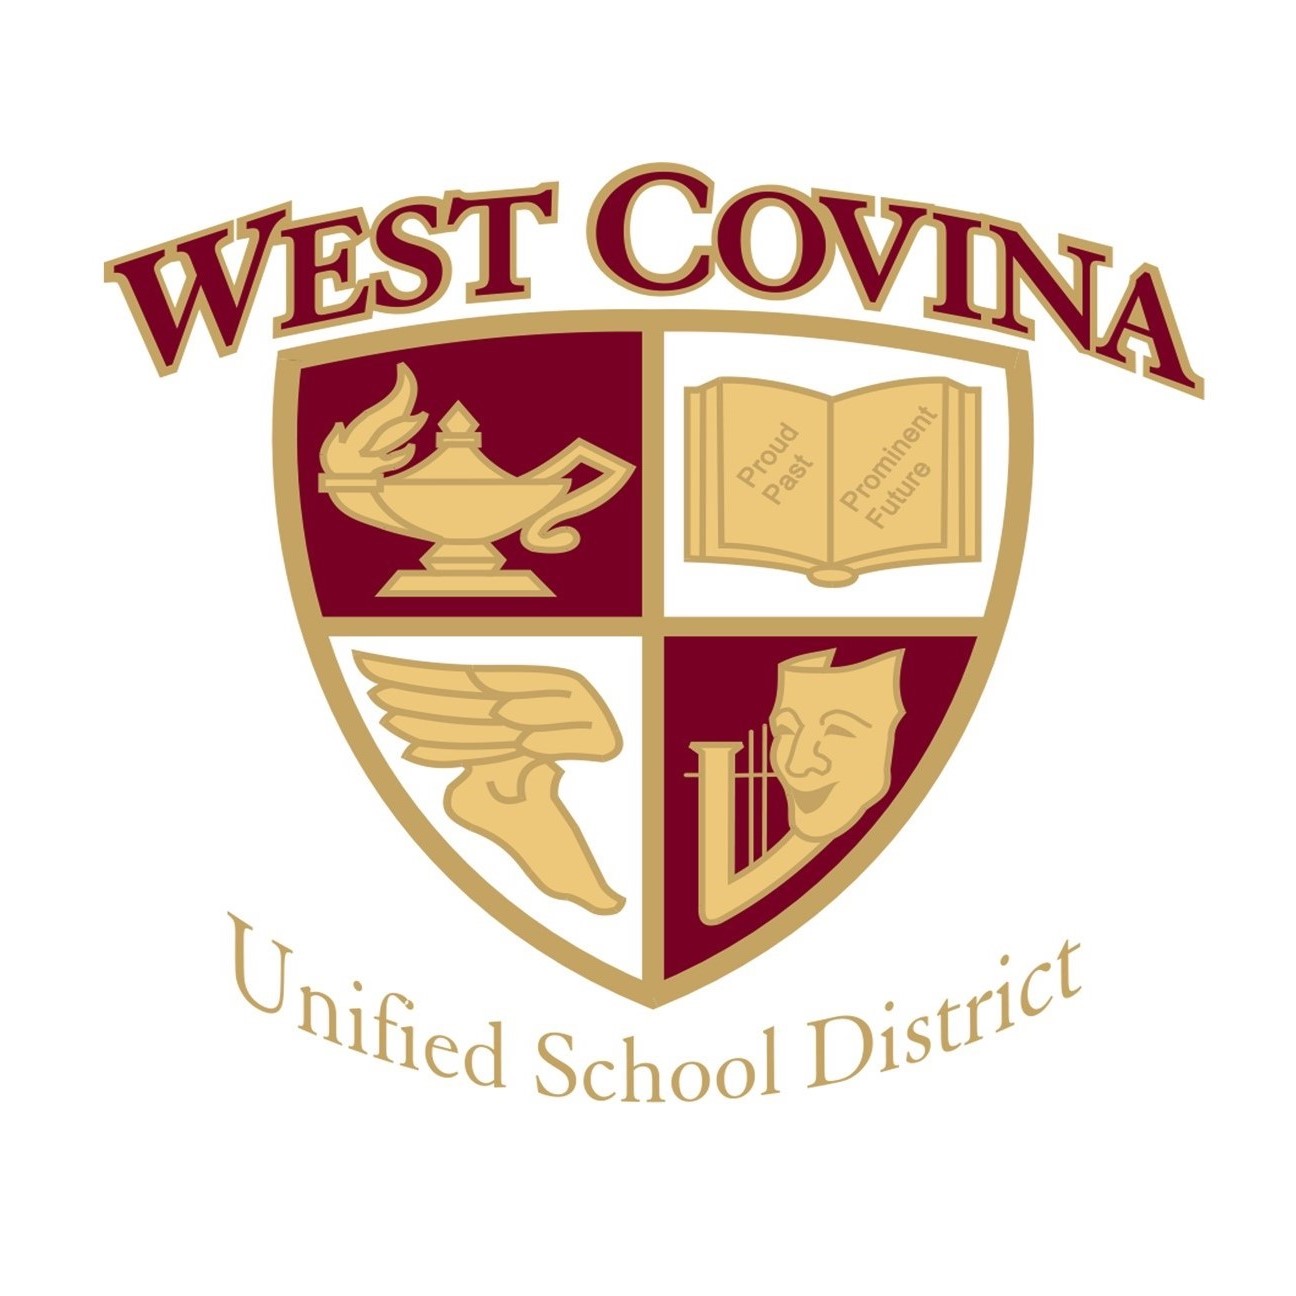 West Covina Unified Logo